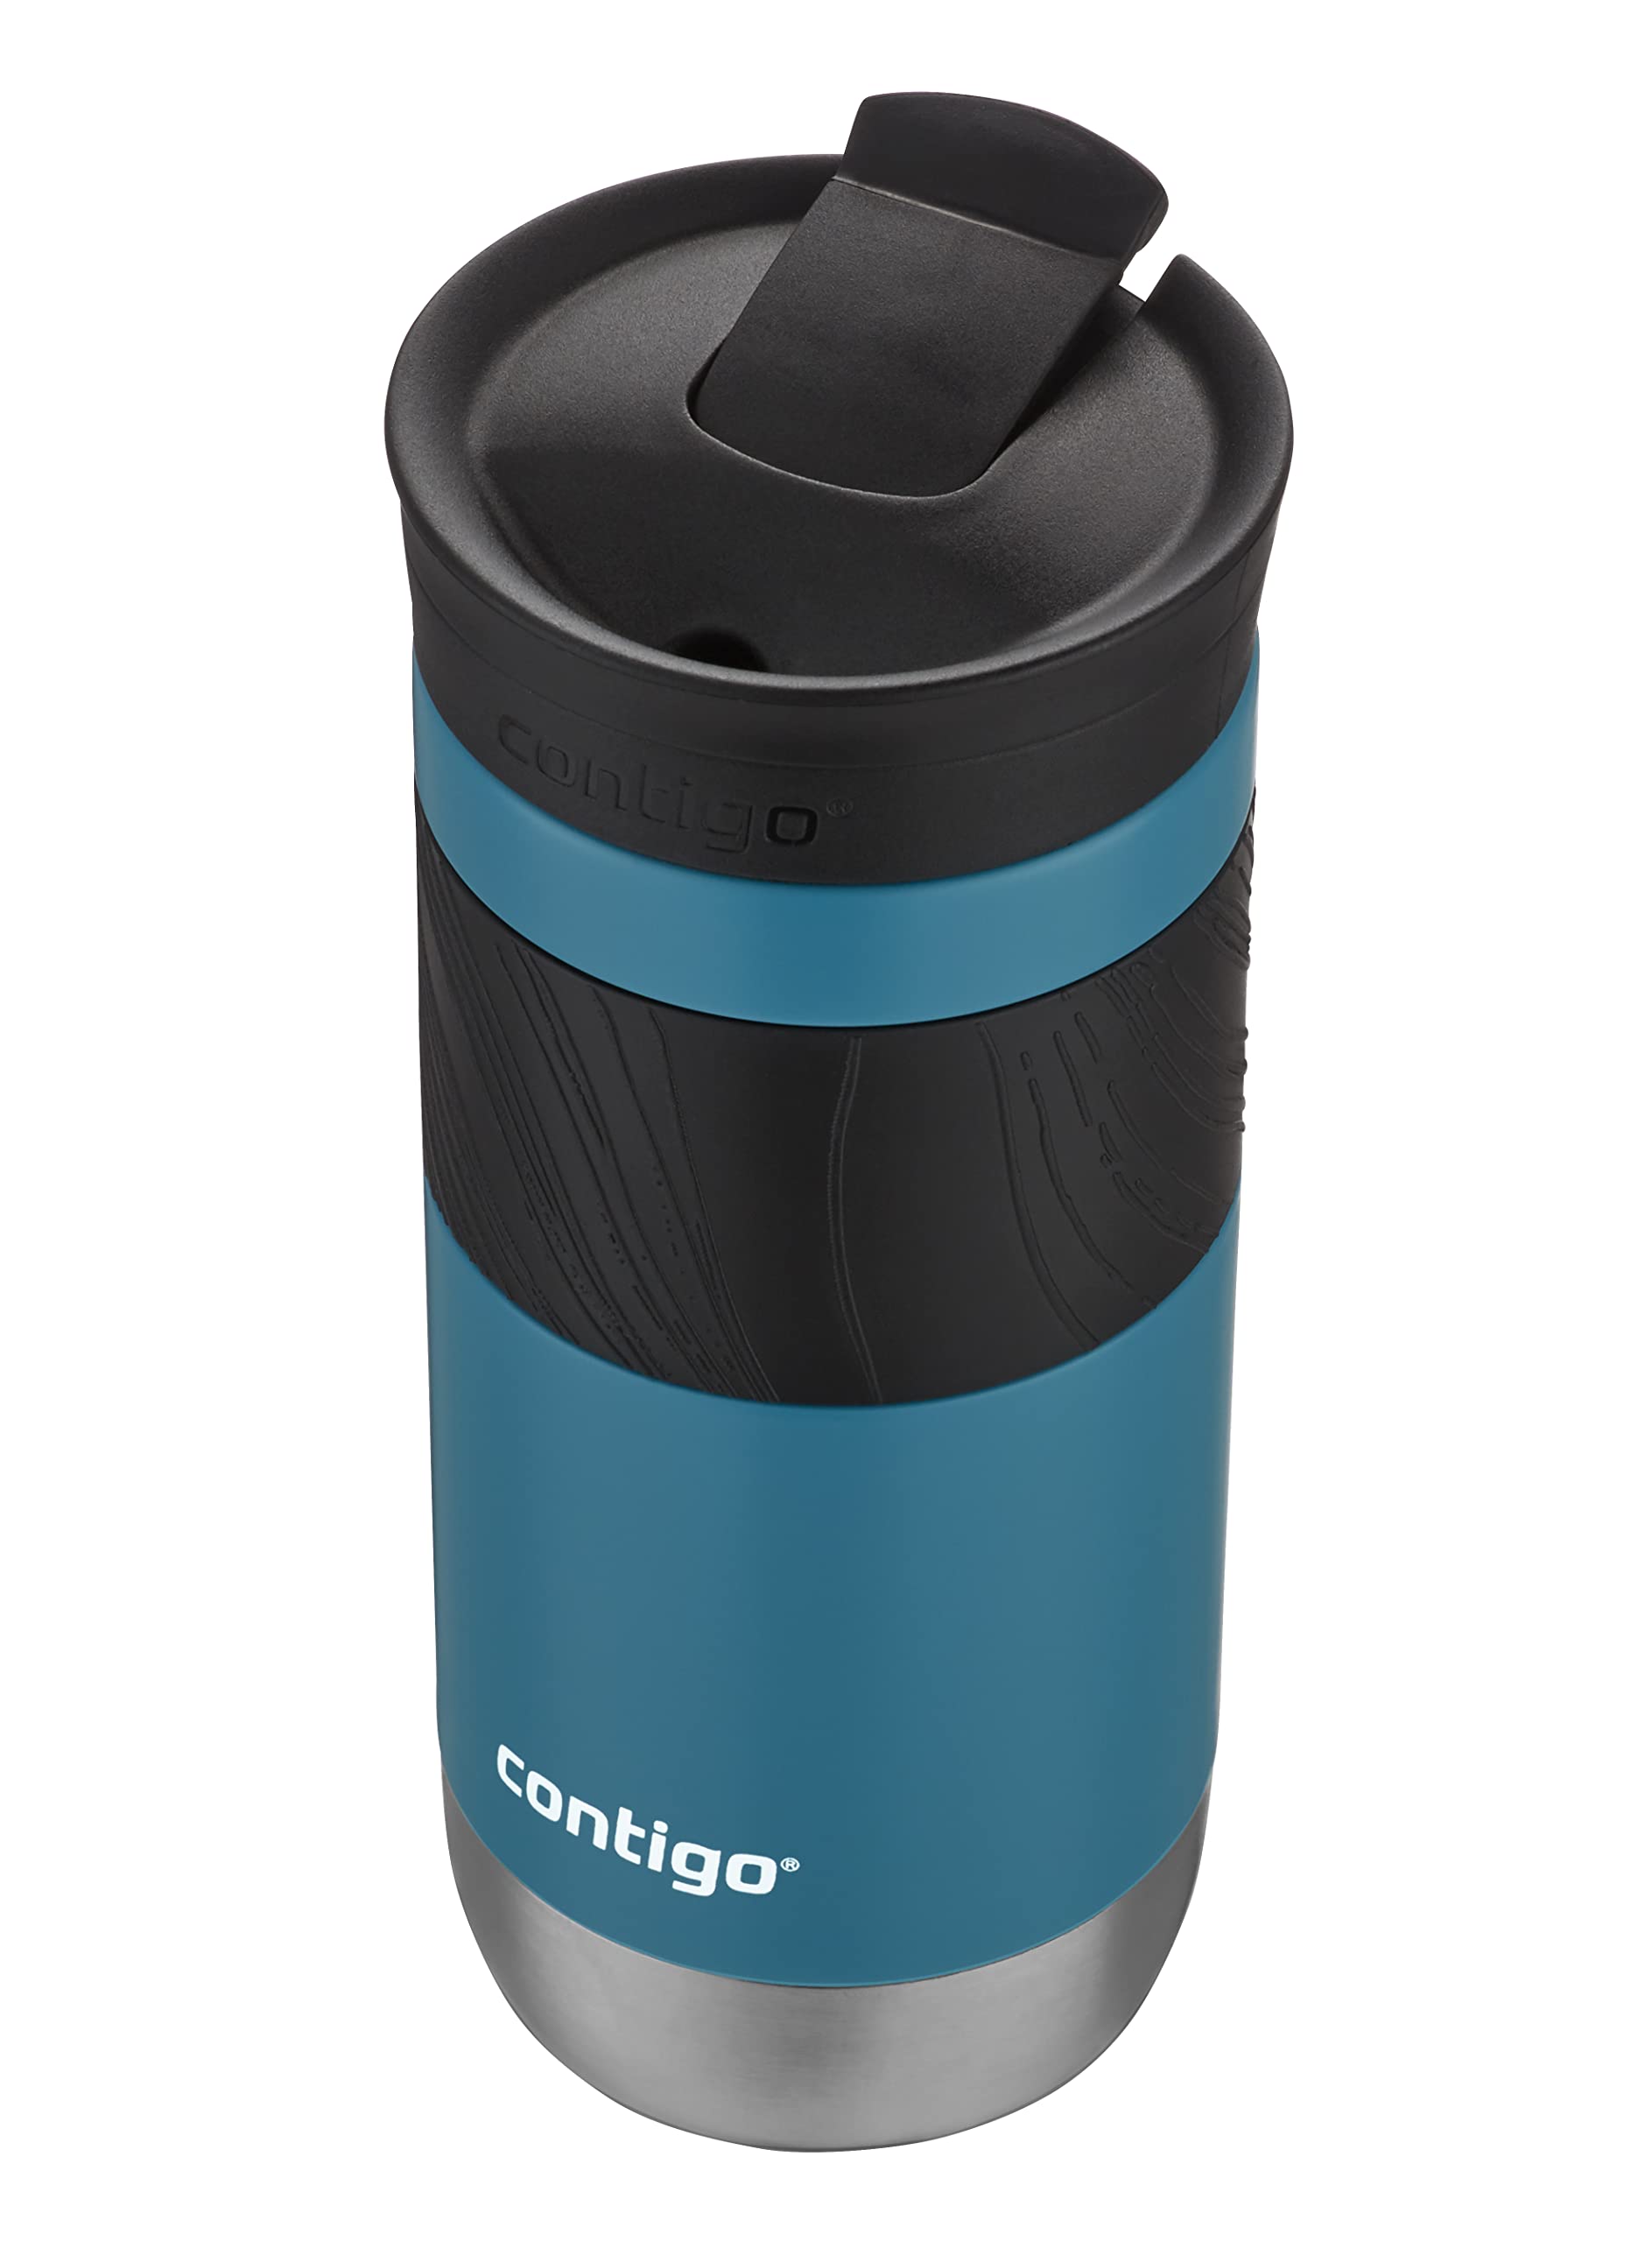 Contigo Byron 2.0 Thermo Mug, Stainless Steel Insulated Mug with Snapseal Closure, Coffee Mug to go, 100% Leak Proof, Dishwasher Safe lid, BPA Free, Keeps Warm up to 6 Hours, 470 ml